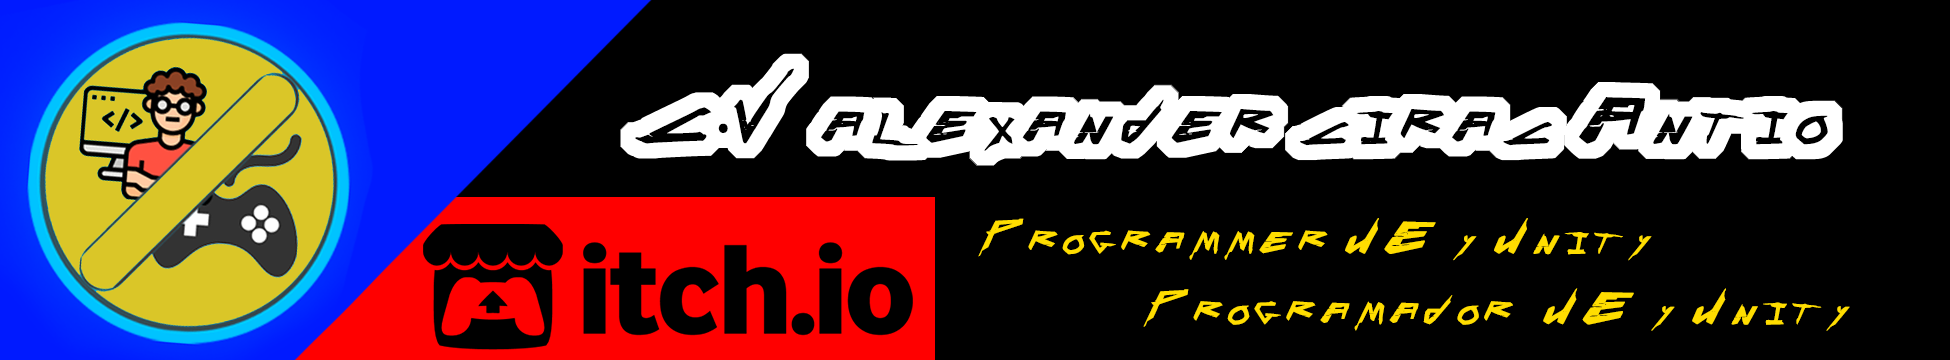 Web_alexander